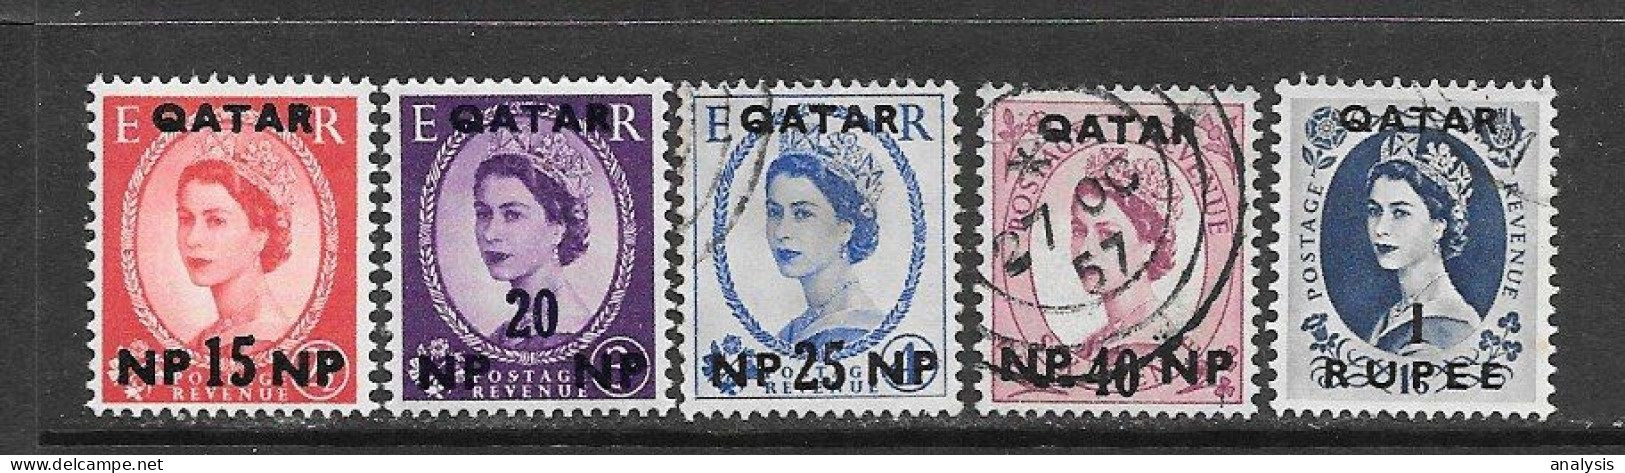 Qatar QEII 5 Stamps 1950s MNH/ Used - Qatar